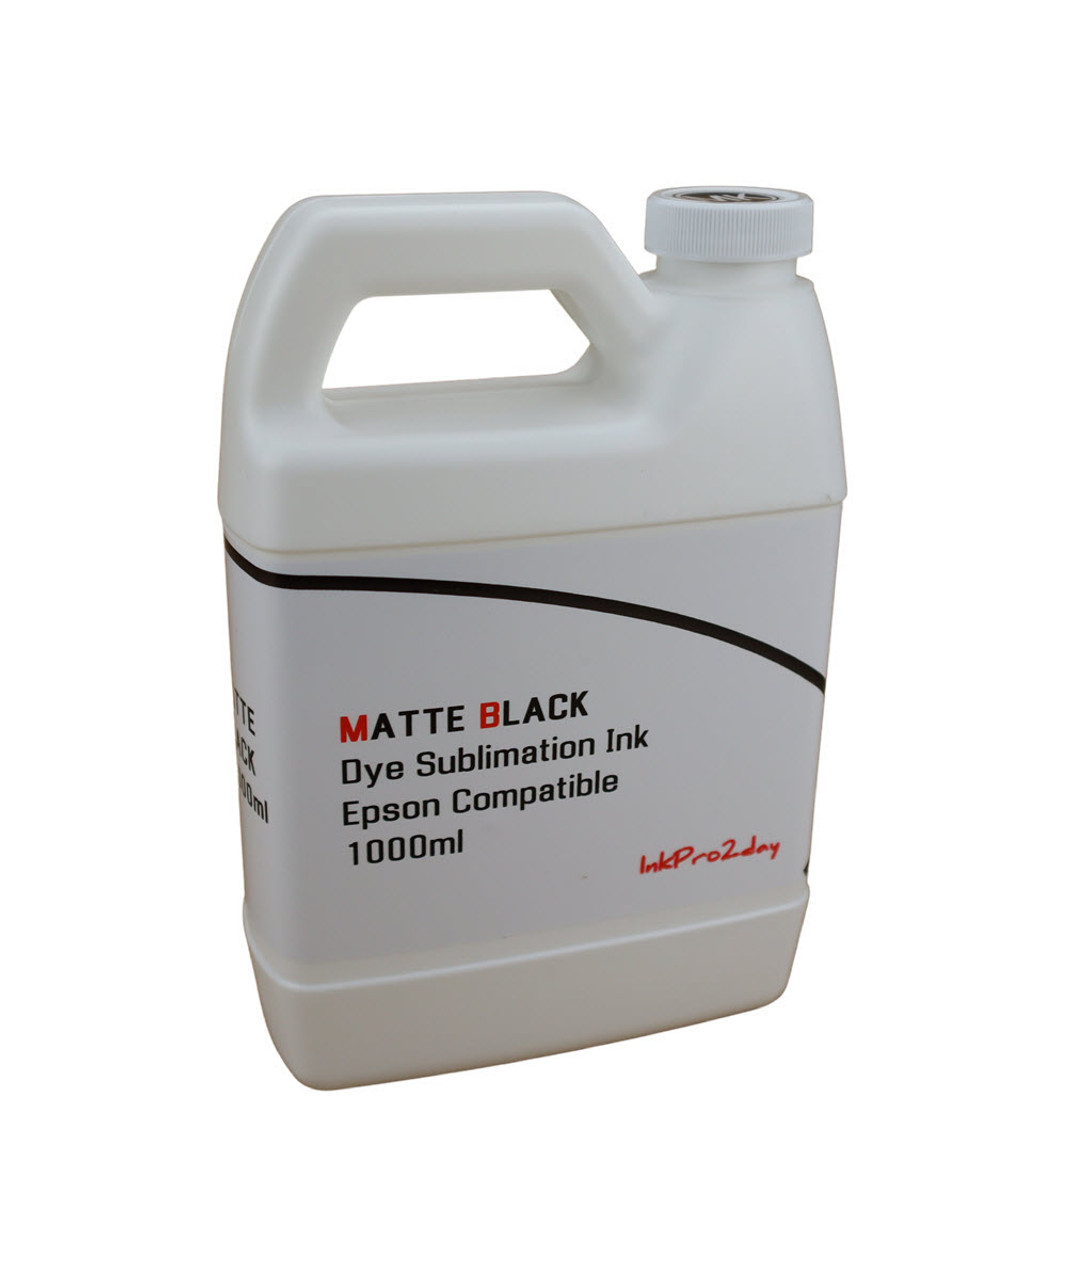 Matte Black Dye Sublimation Ink 1000ml Bottle for Epson Stylus Pro 4800 printer